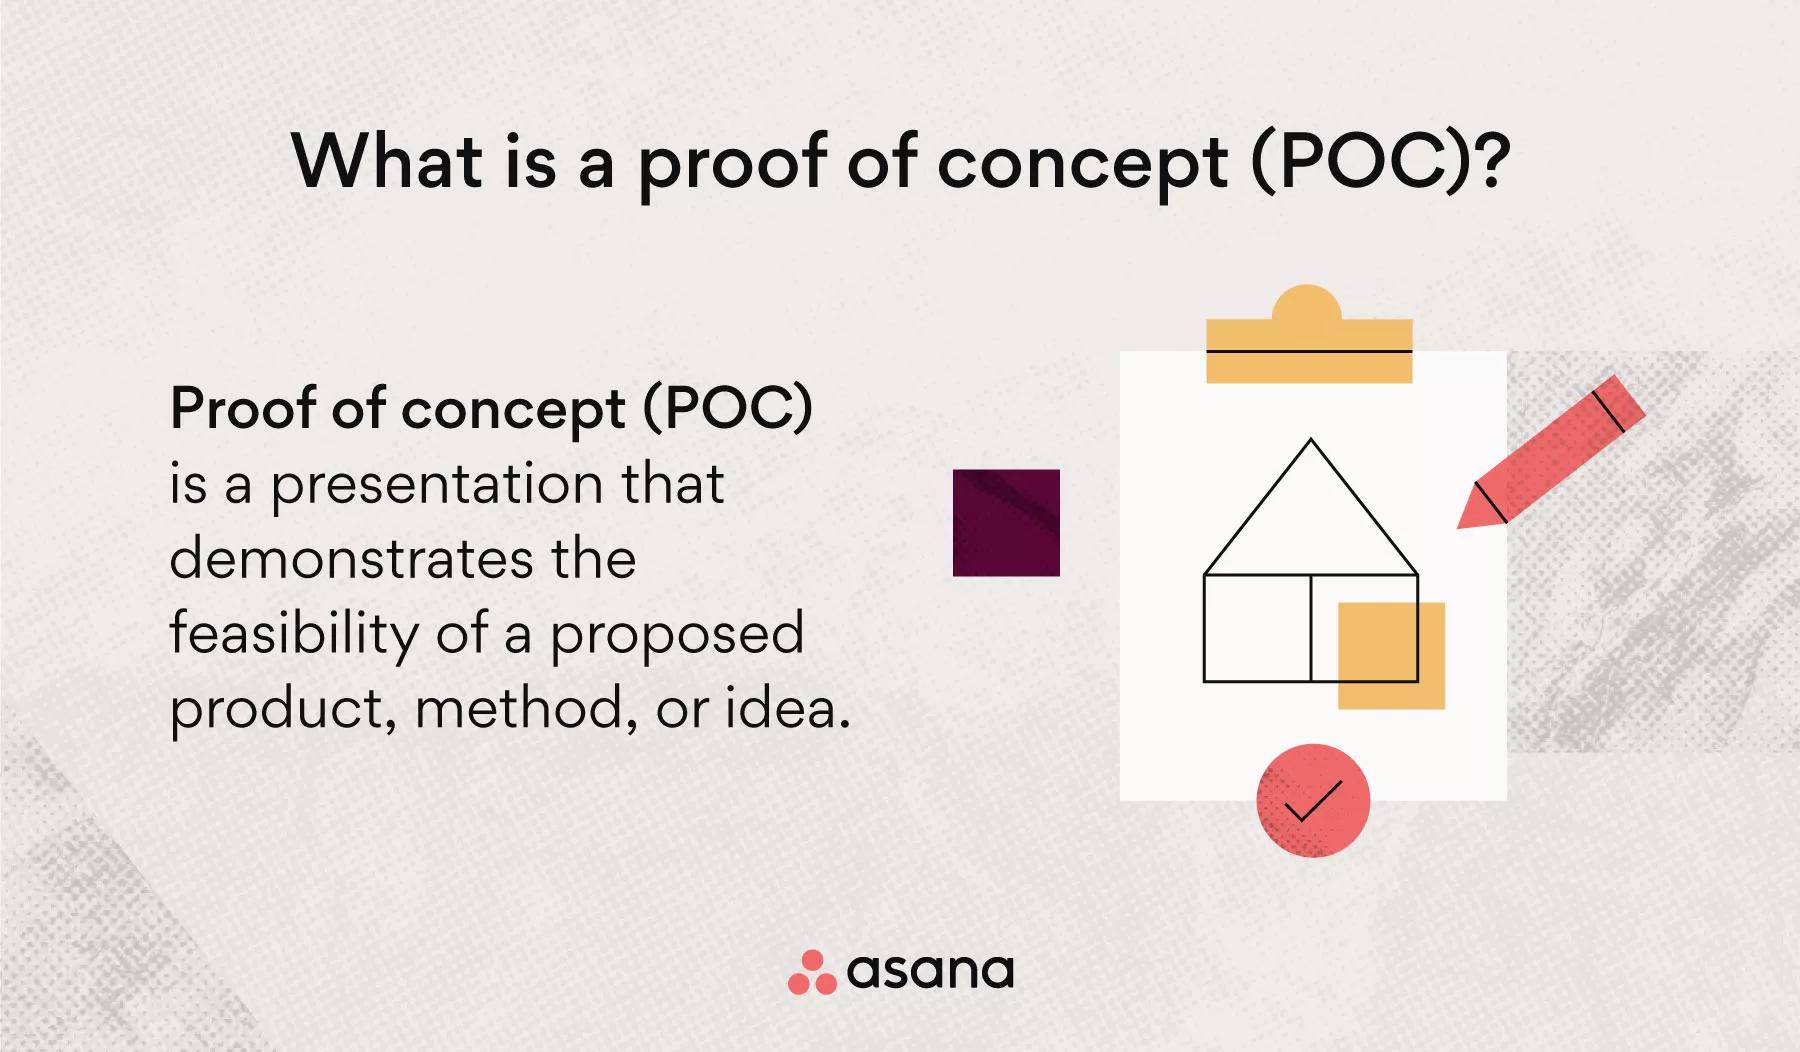 Full article: Assessment framework for Proof of Concept (PoC) in